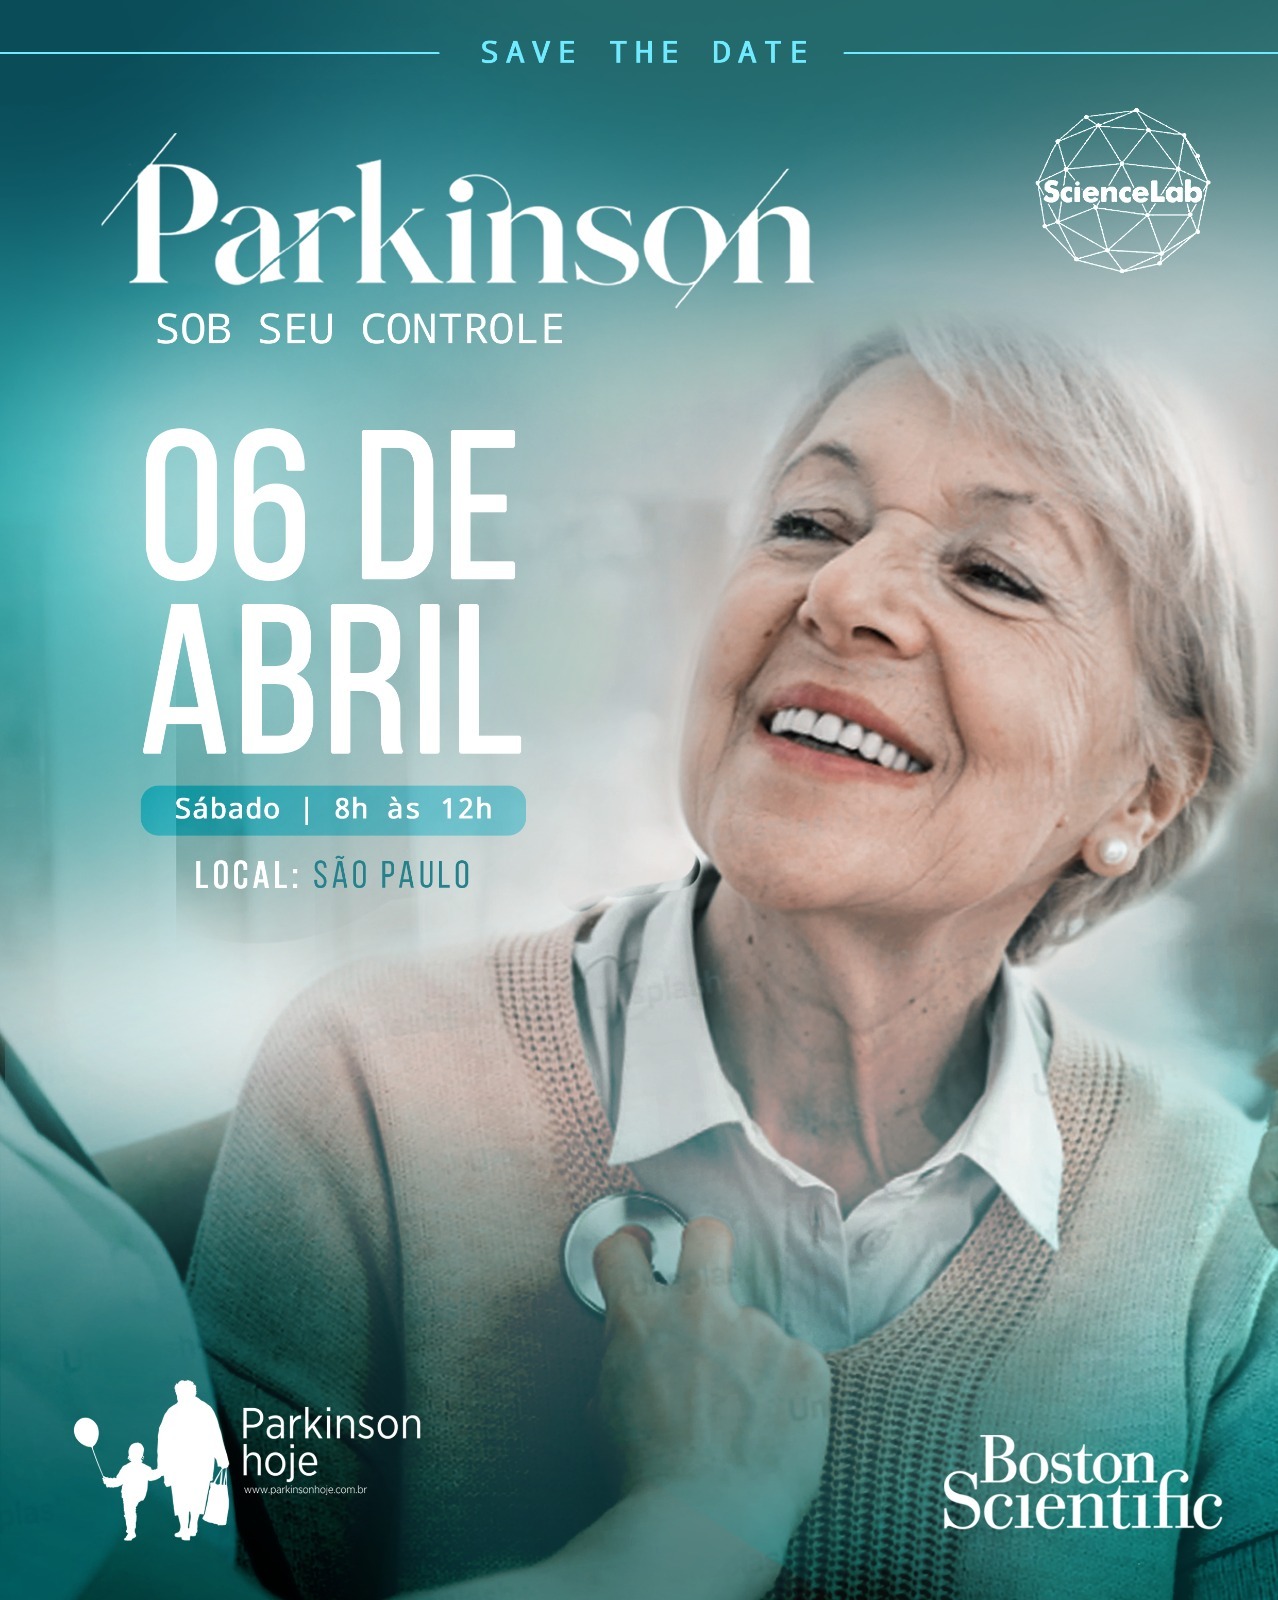 (c) Parkinsonhoje.com.br